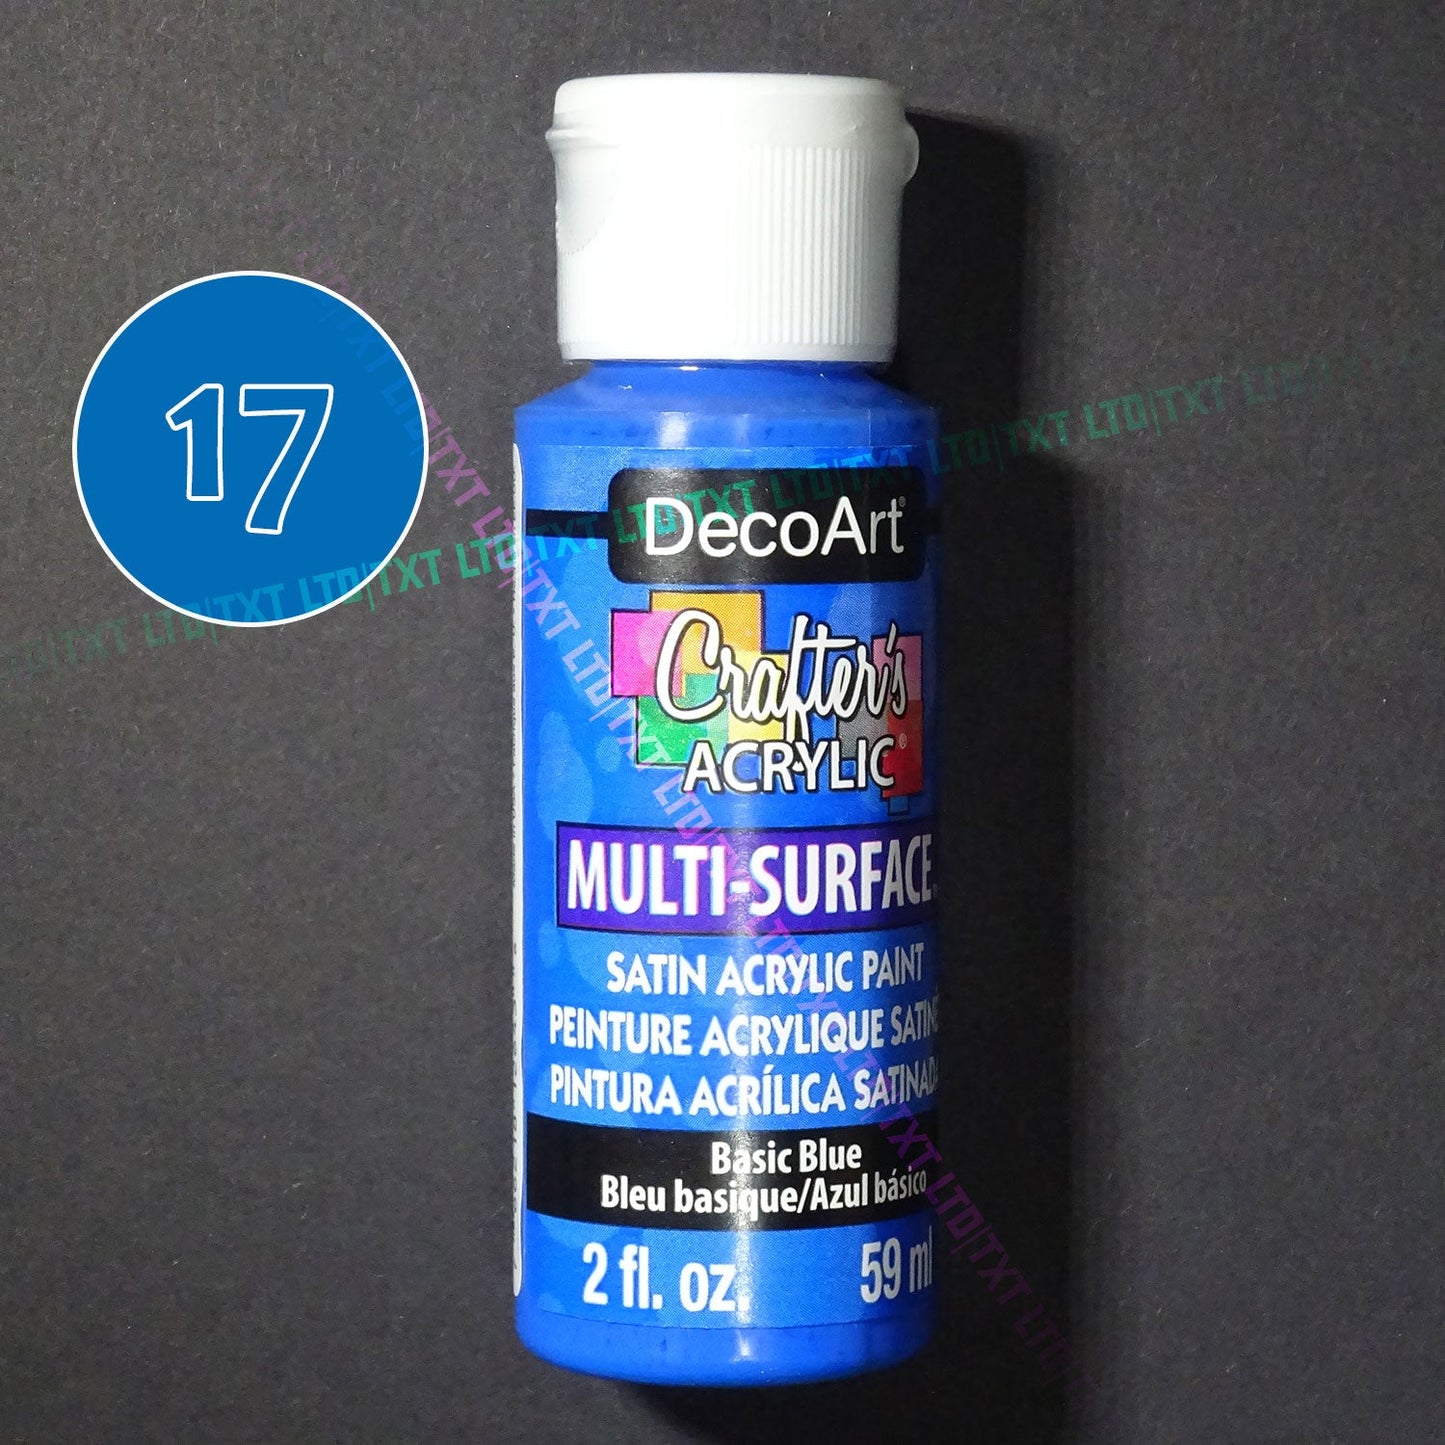 DecoArt Crafters Acryl Multi-Surface, 59ml/2oz.